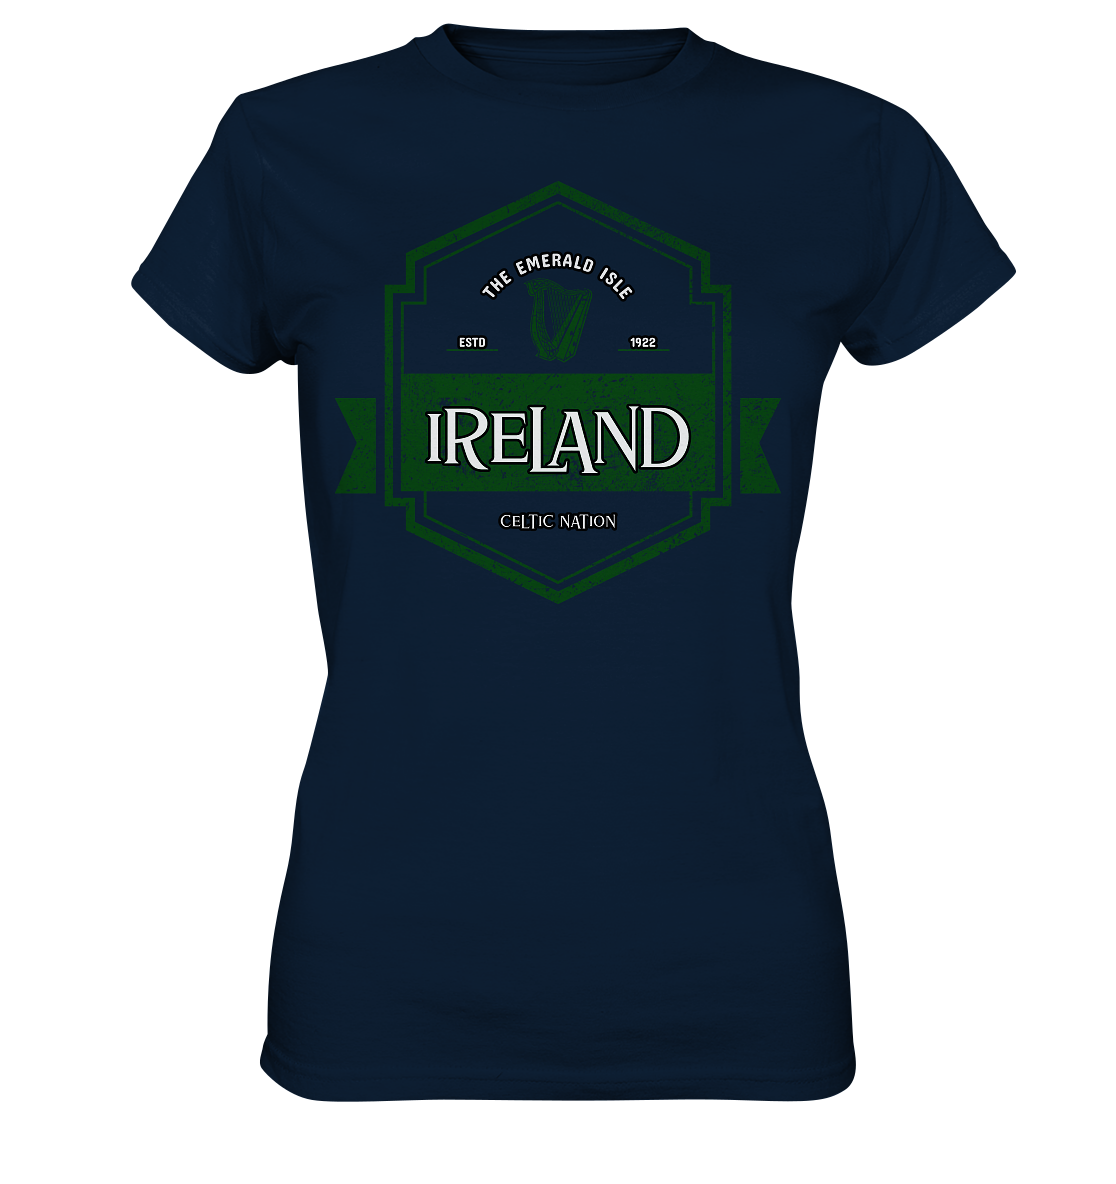 Ireland "The Emerald Isle / Celtic Nation" - Ladies Premium Shirt